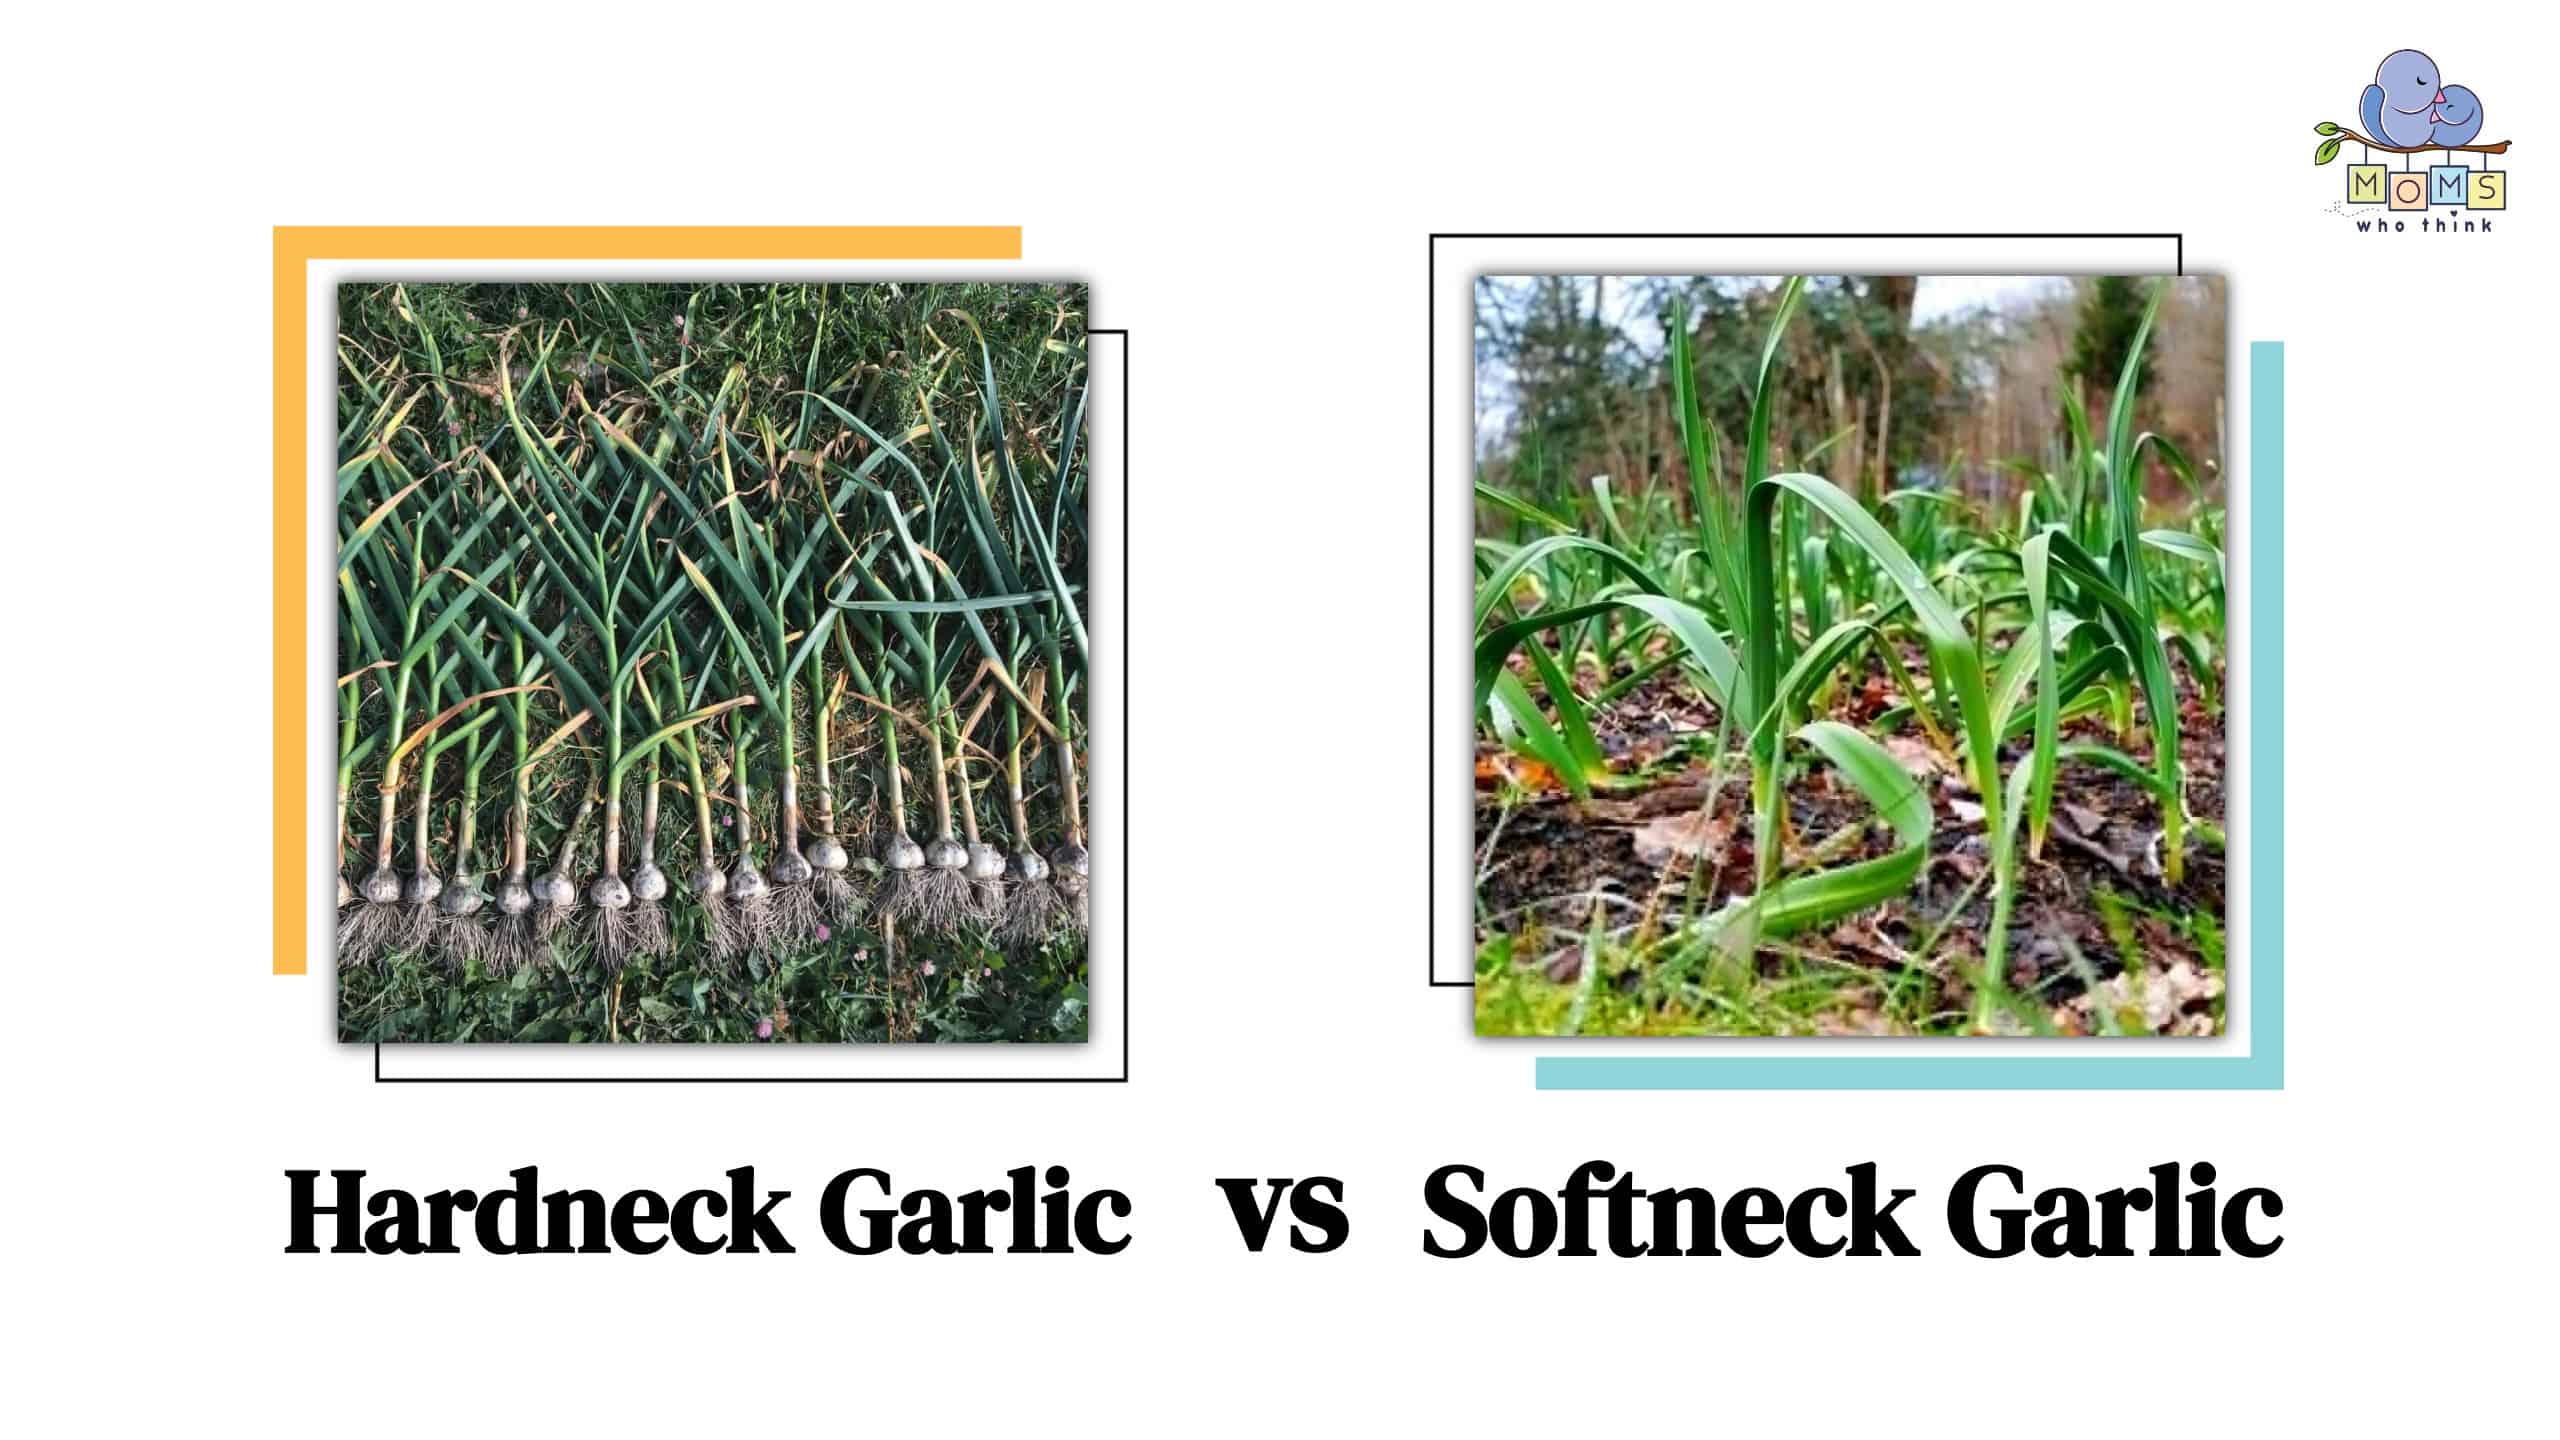 Hardneck Garlic vs Softneck Garlic